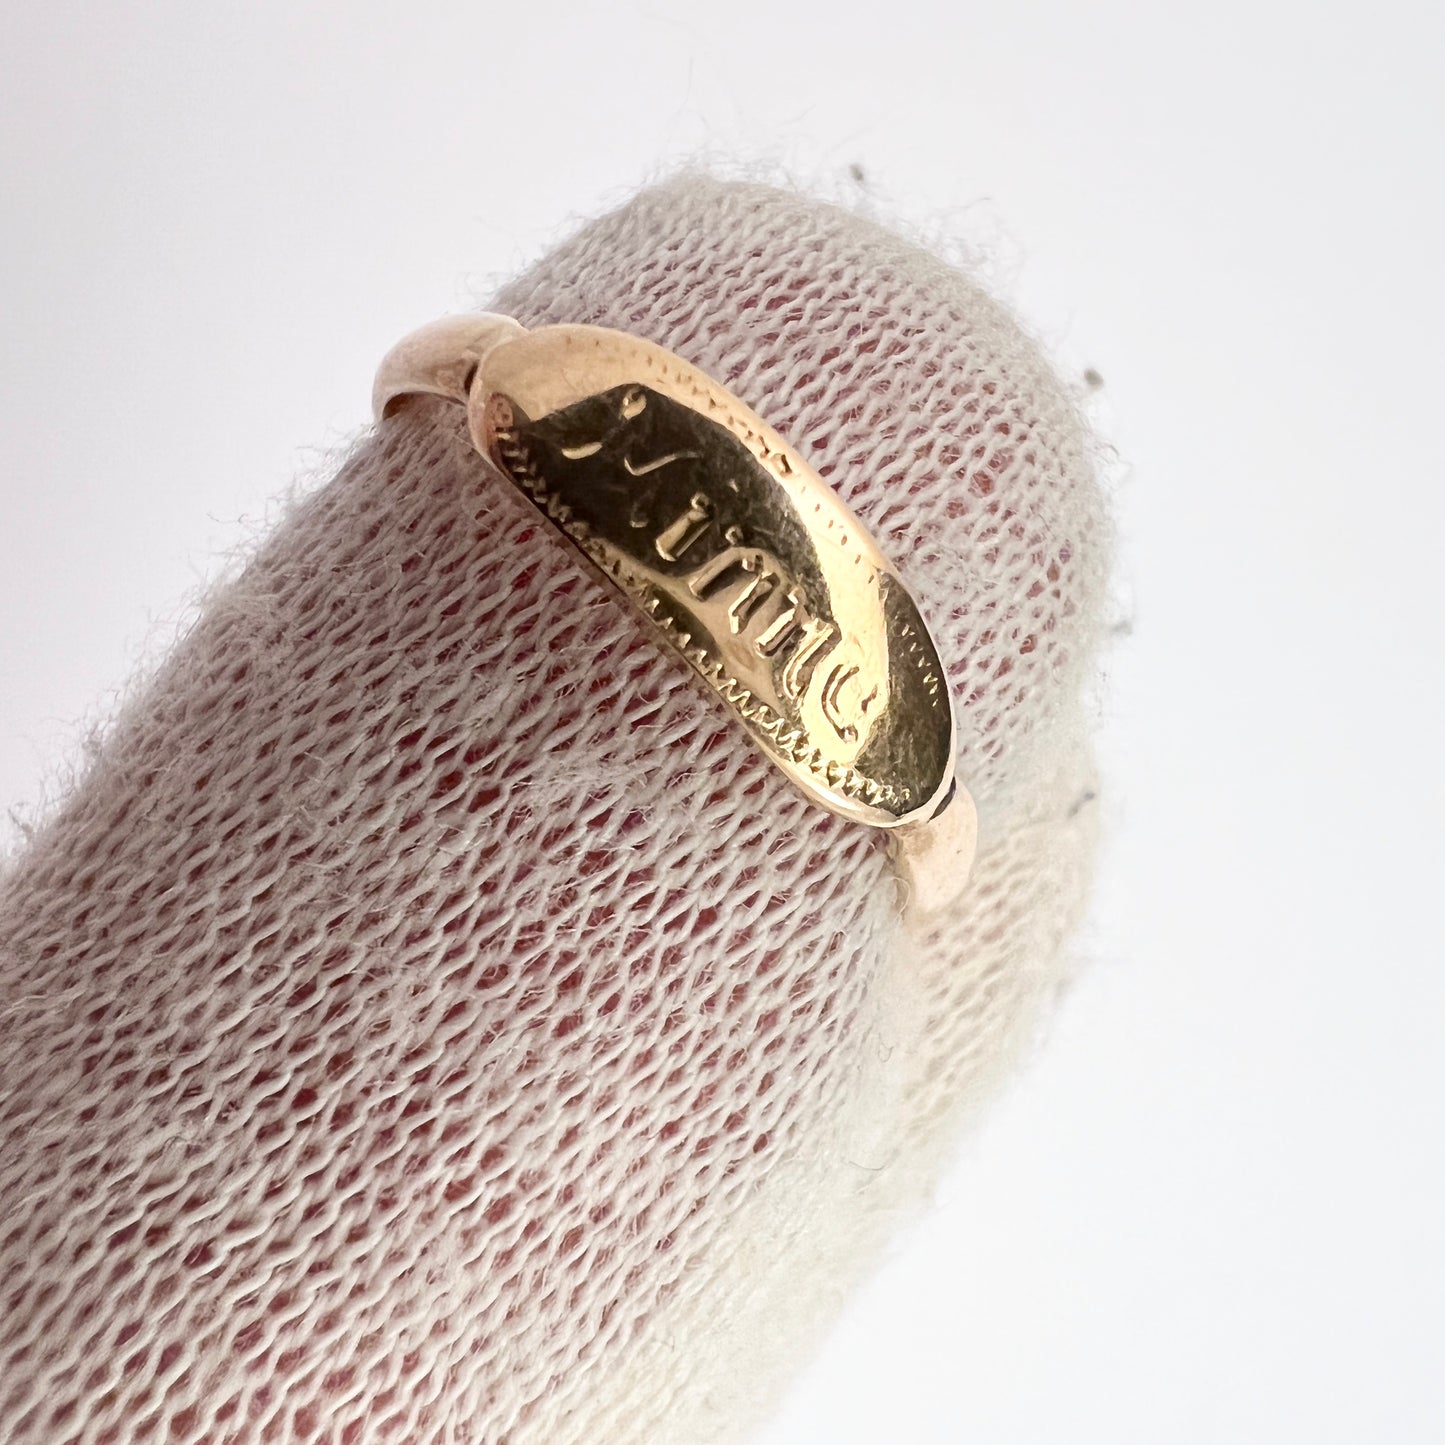 Swedish Import c 1910. Antique 14k Gold Memory Ring.